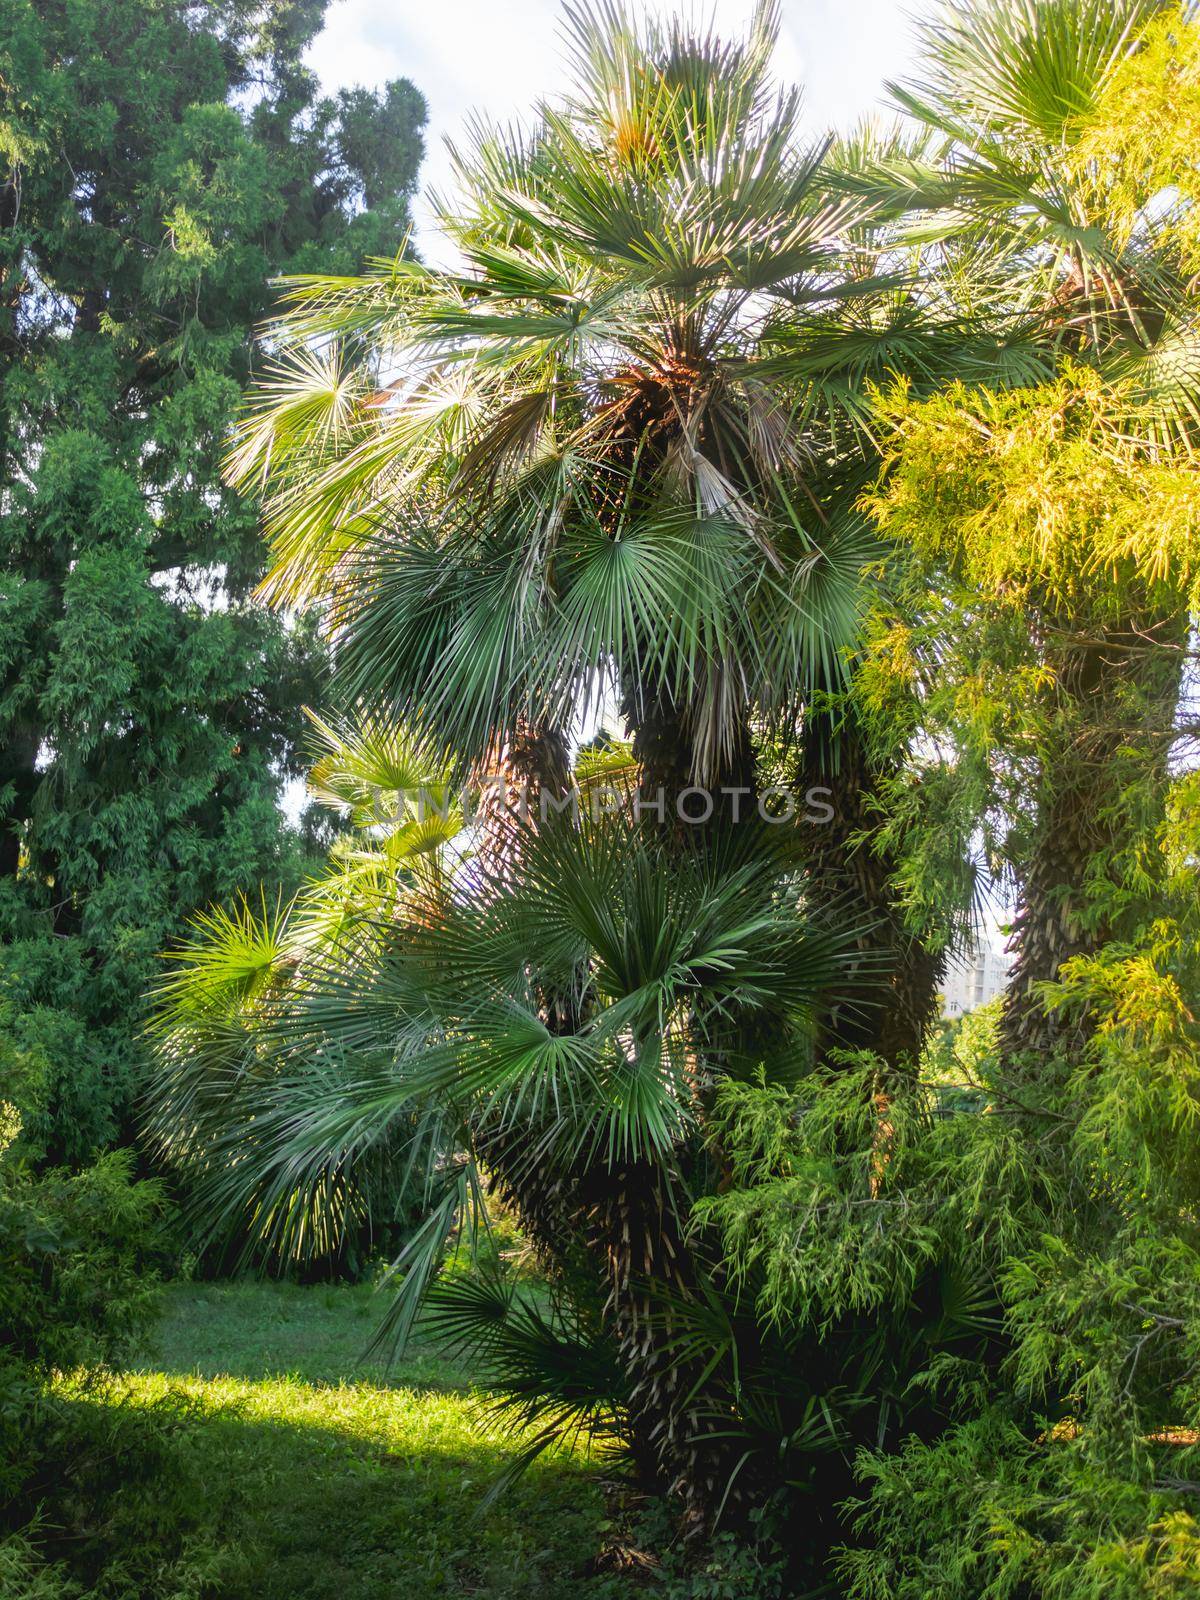 Chamaerops humilis, variously called European fan palm or the Mediterranean dwarf palm. Recreation park at sunset.